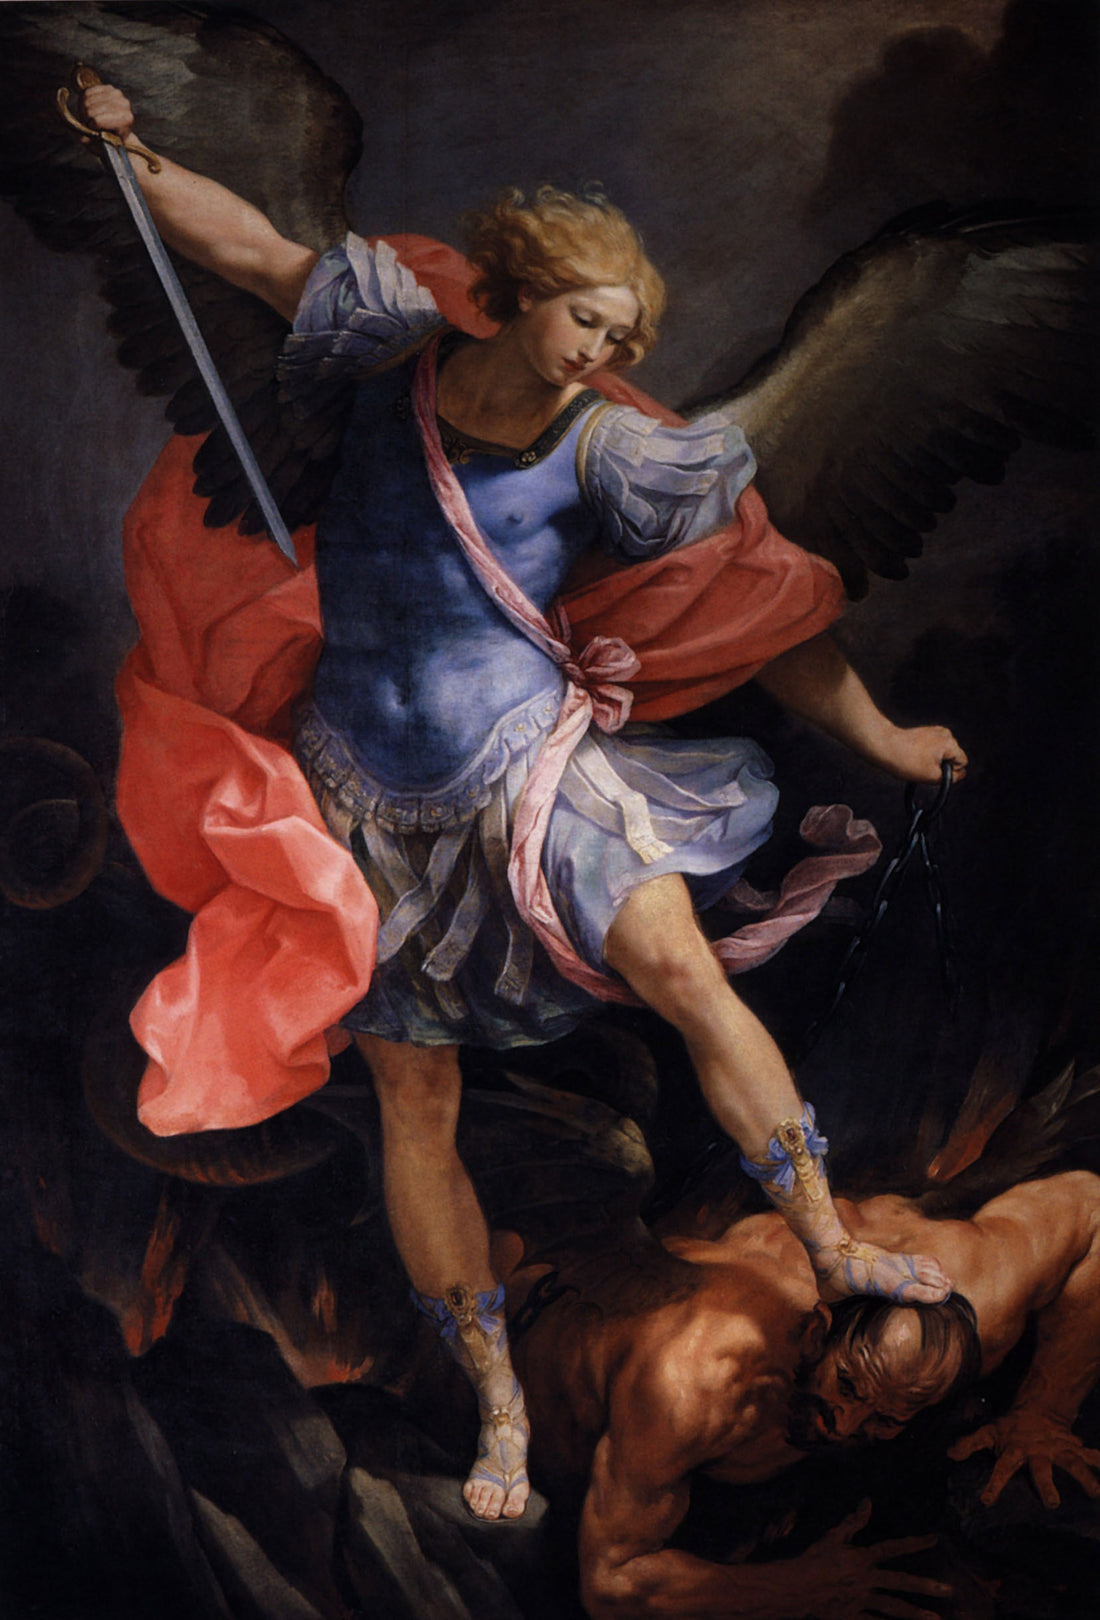 St. Michael The Archangel